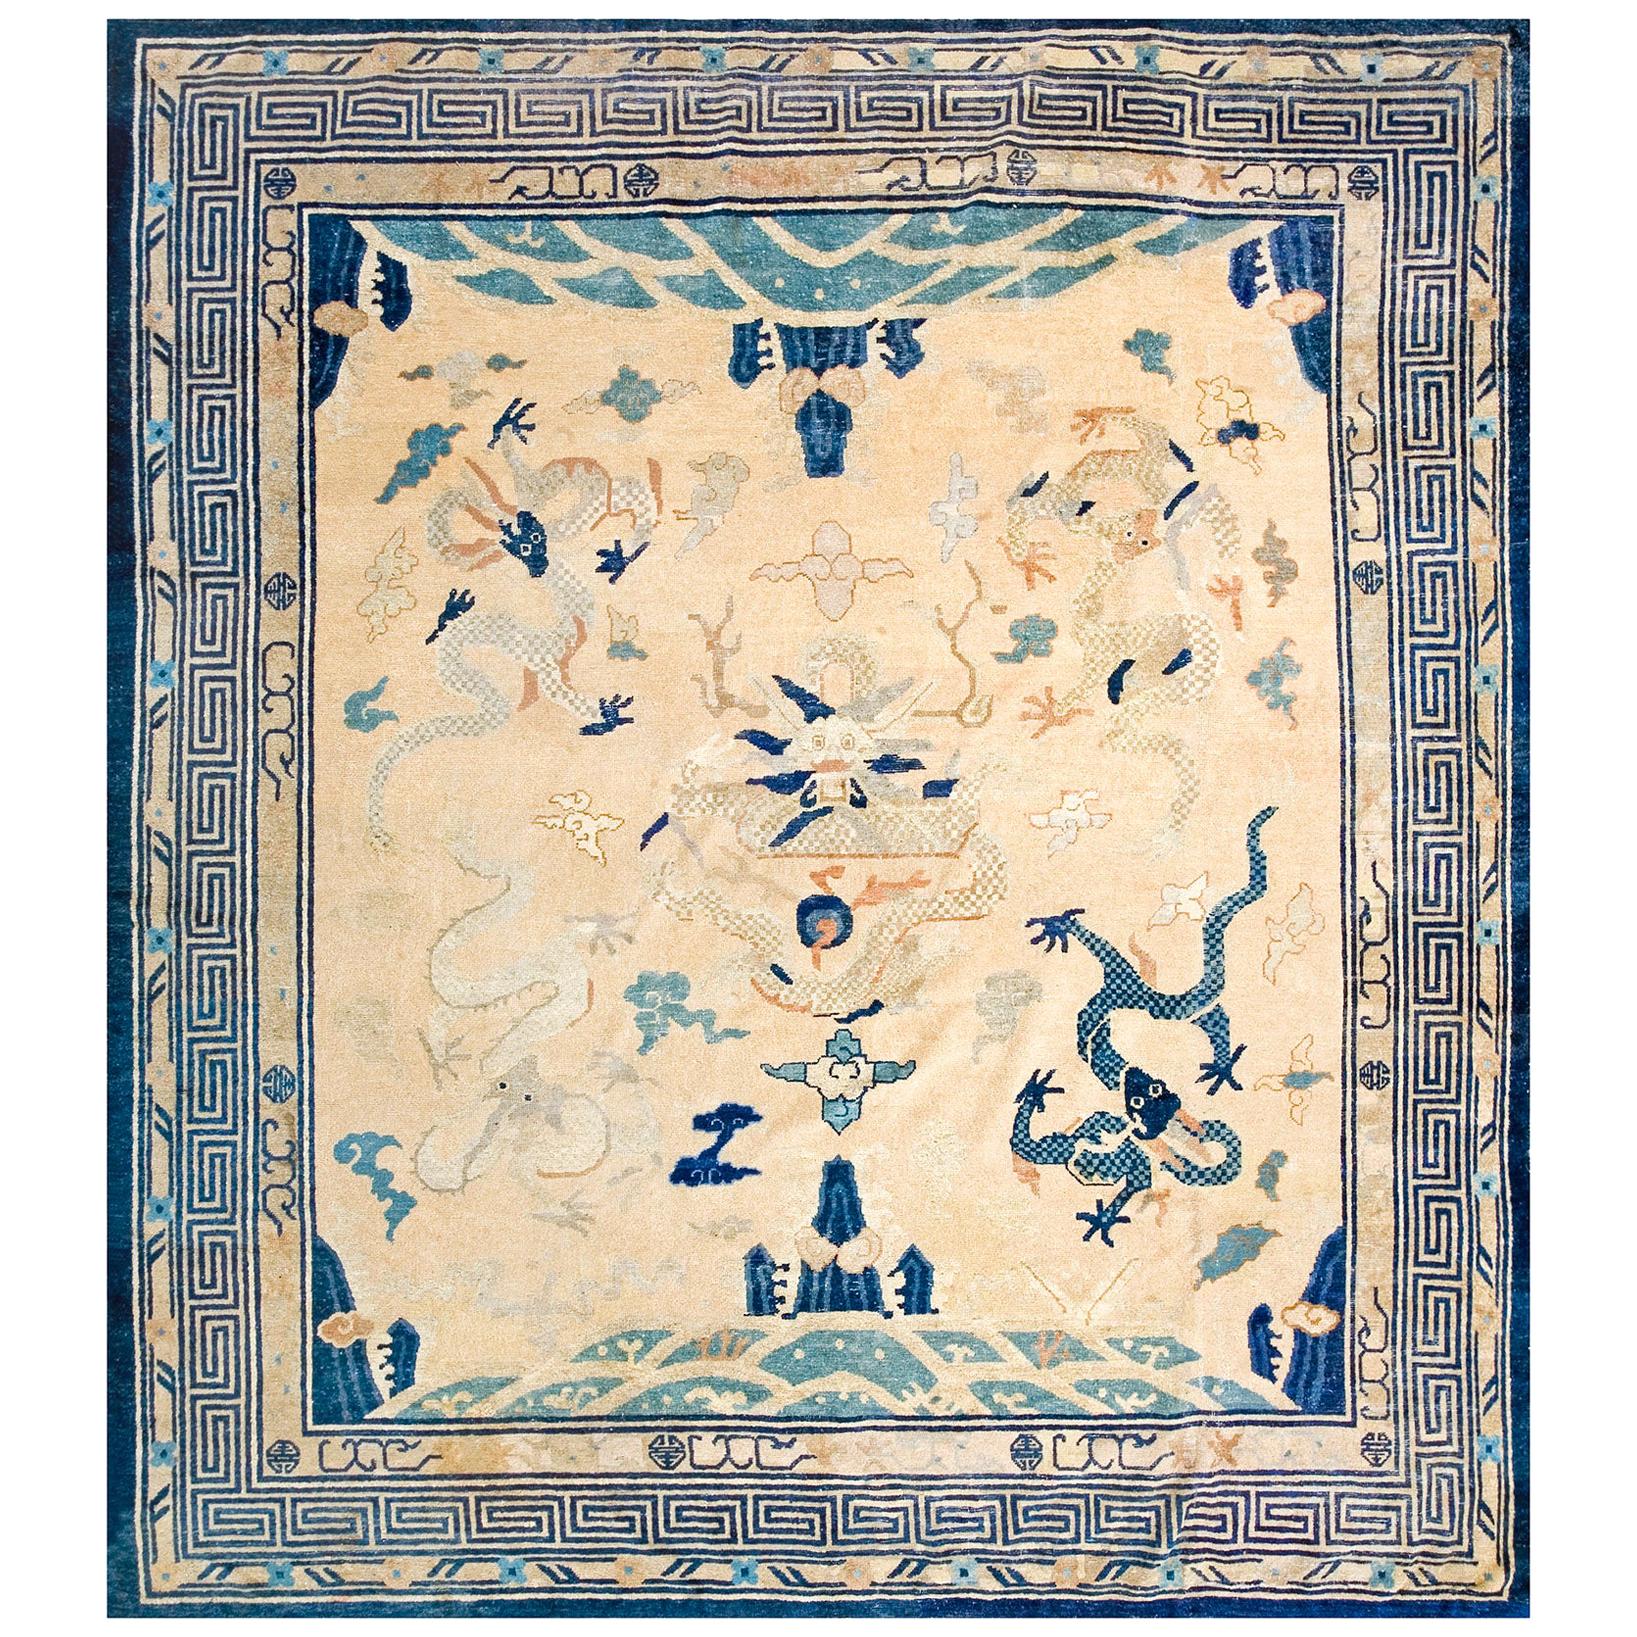 19th Century Chinese Peking Dragon Carpet ( 8'7" x 9'4" - 262 x 284 ) For Sale